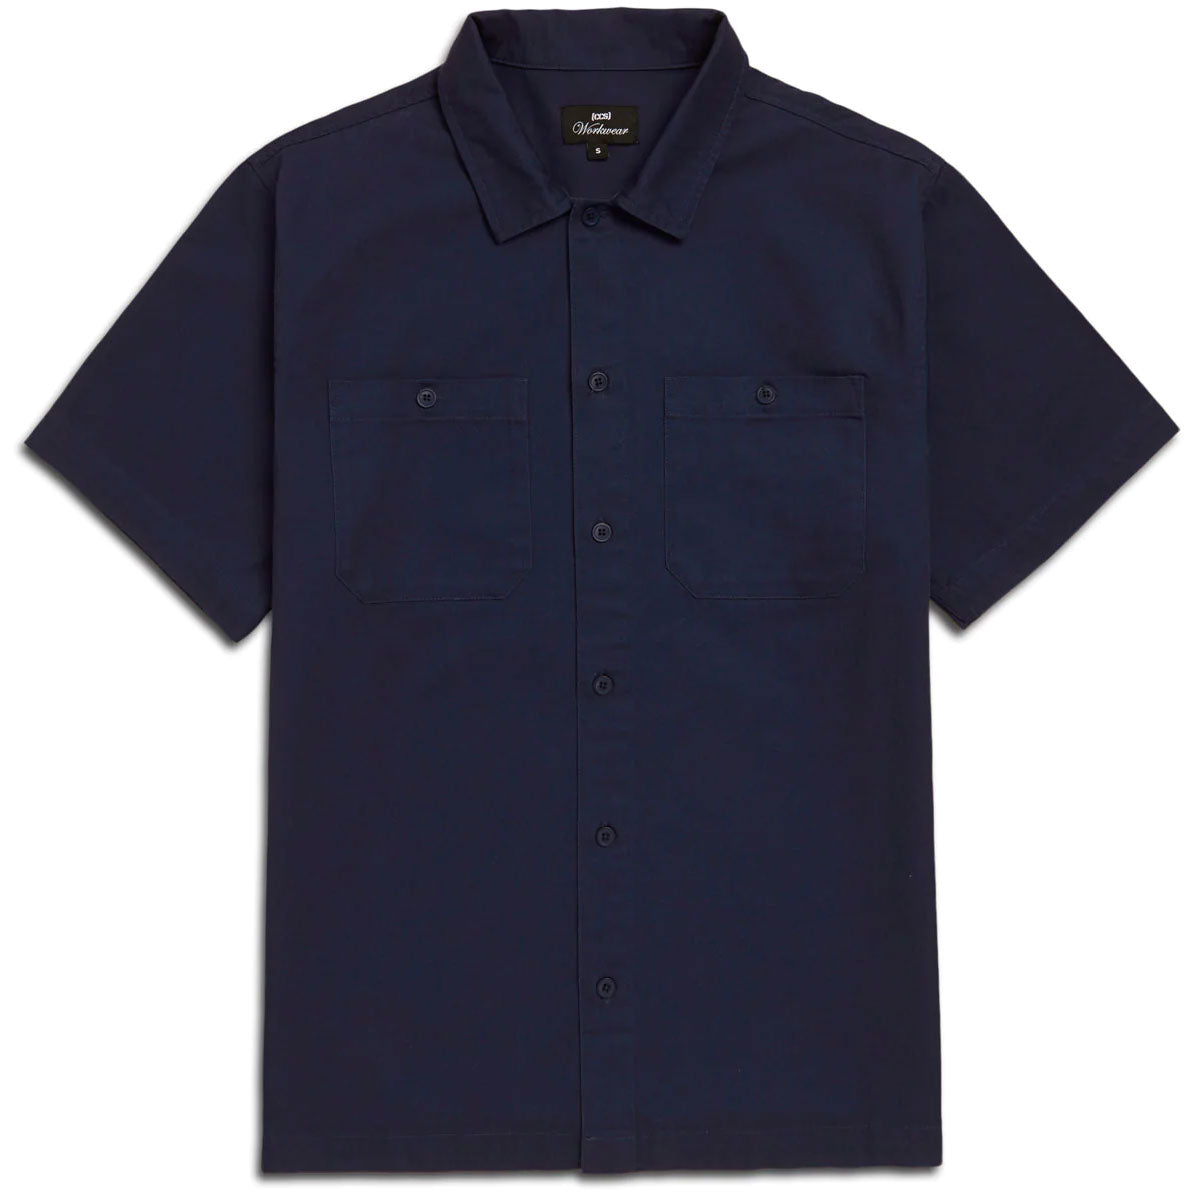 CCS Custom Embroidered Work Shirt - Navy image 2